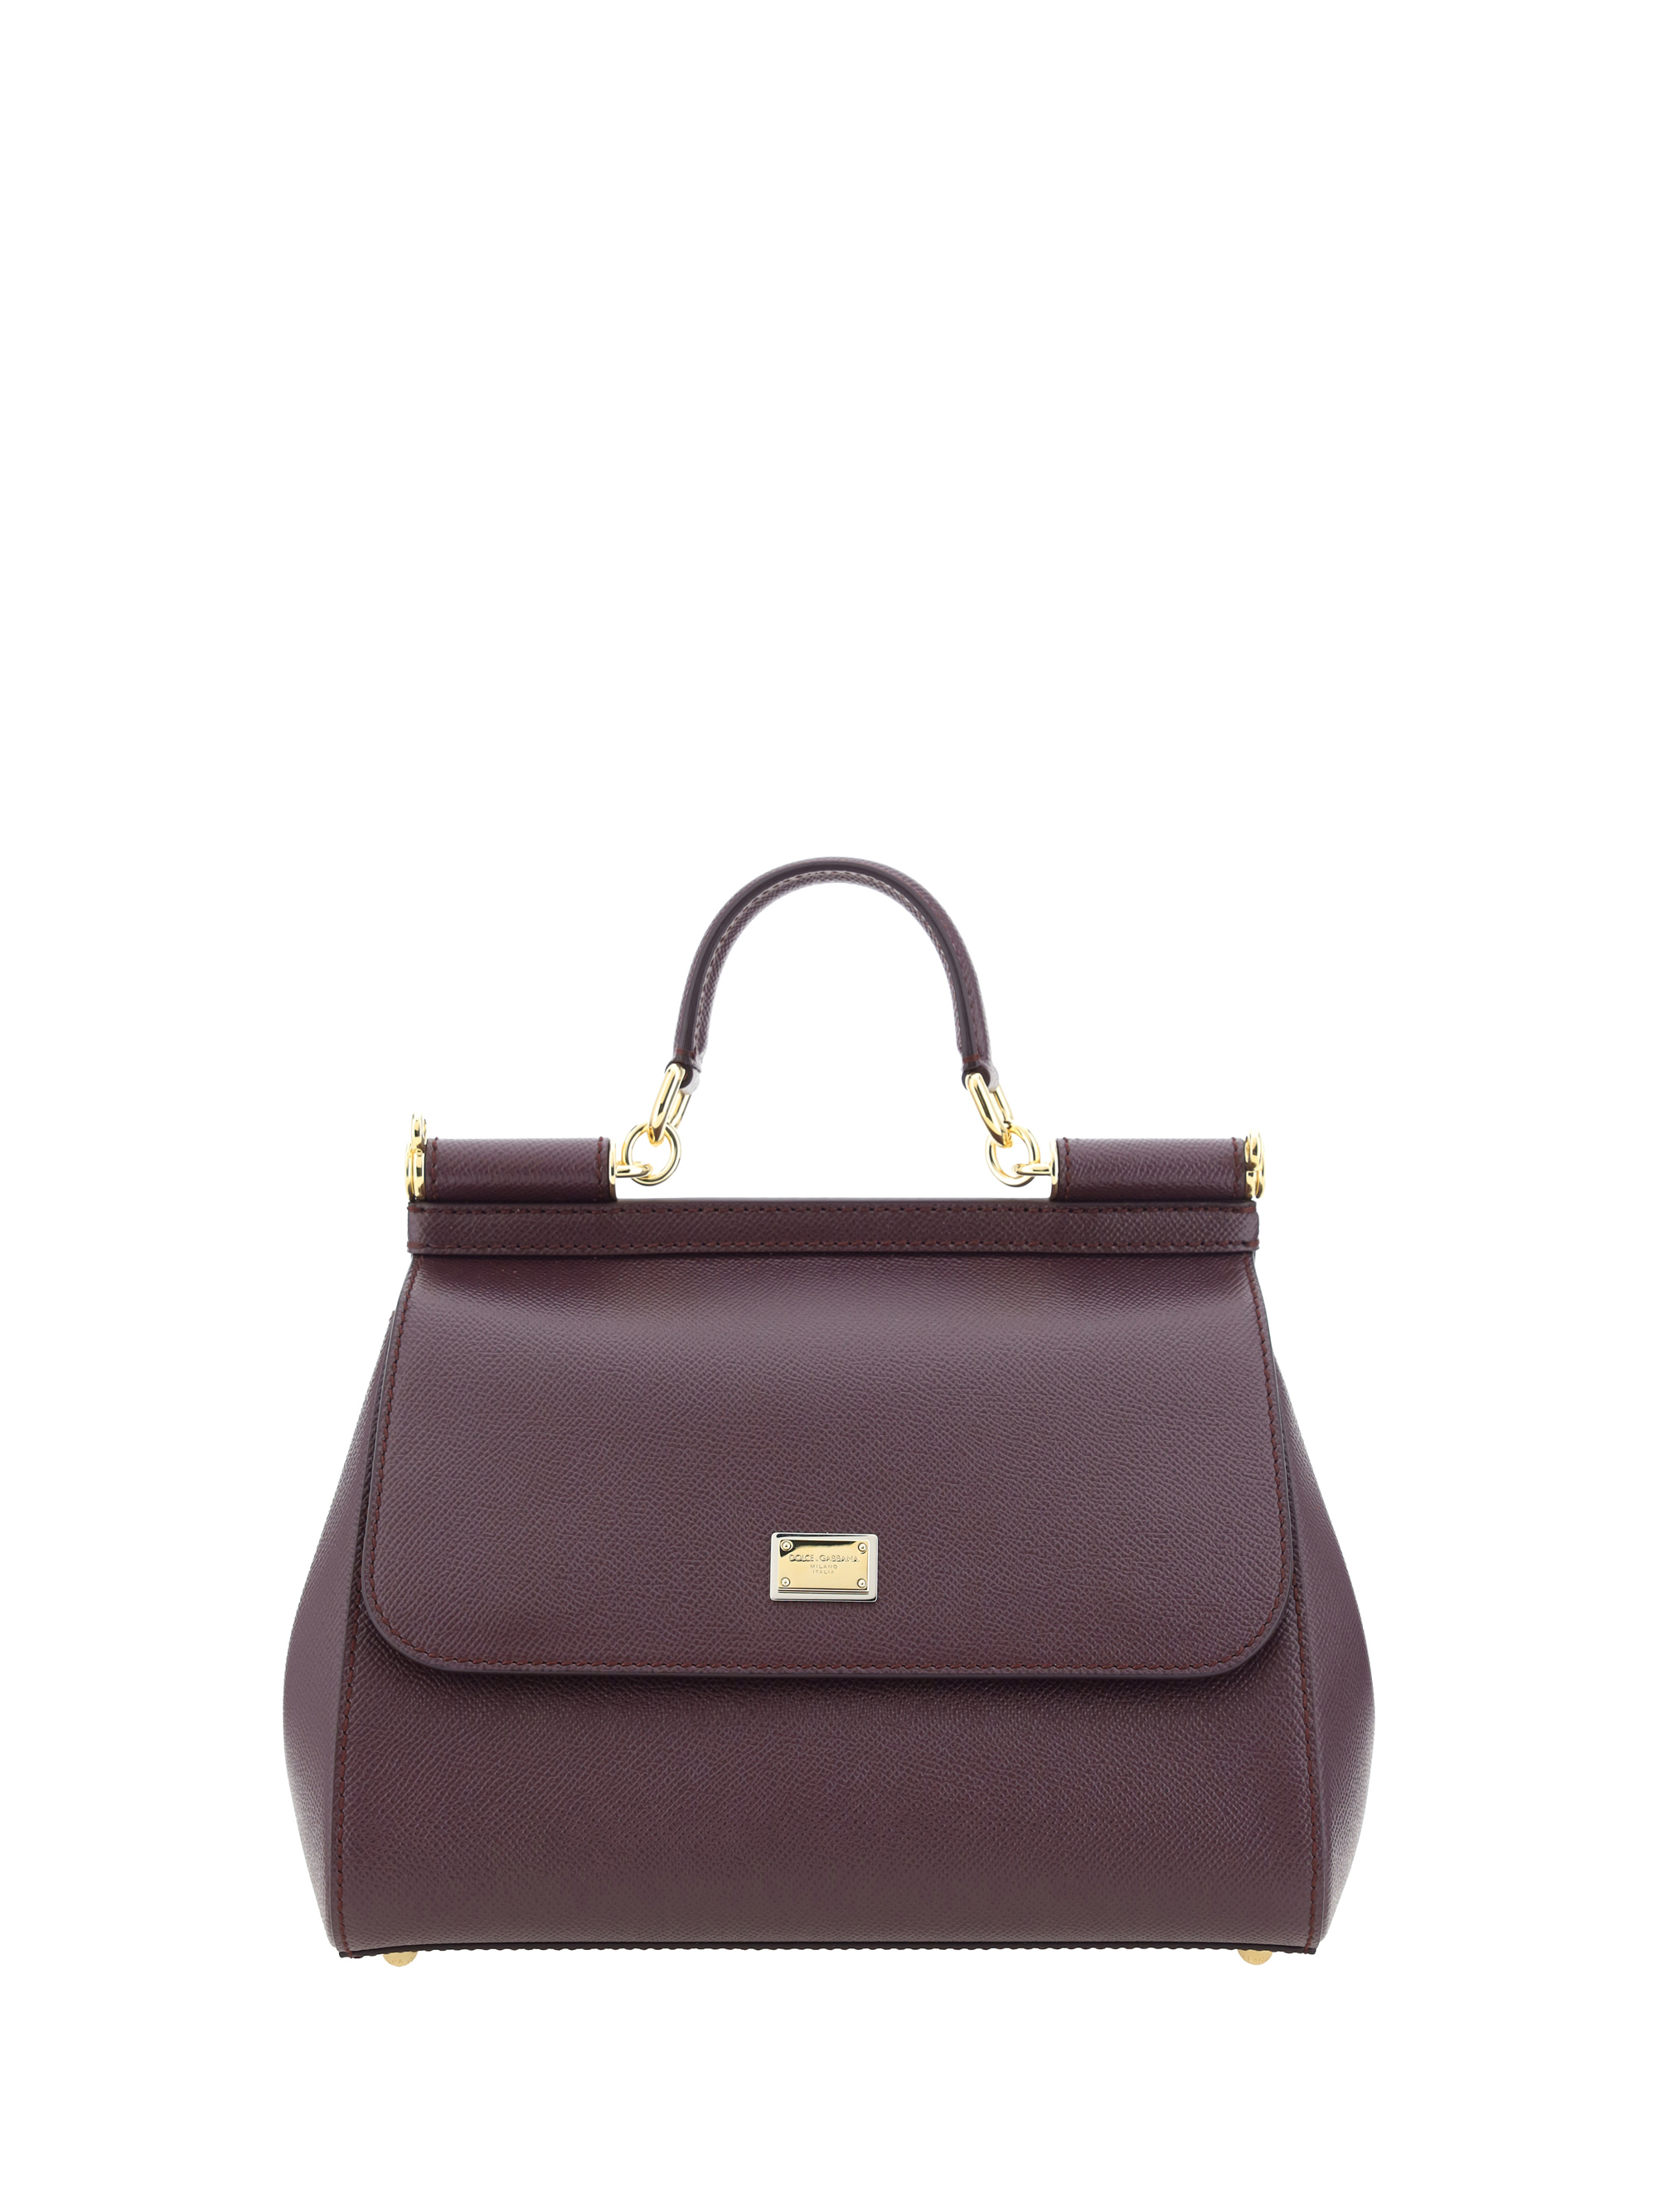 Dolce & Gabbana Sicily Handbag In Purple